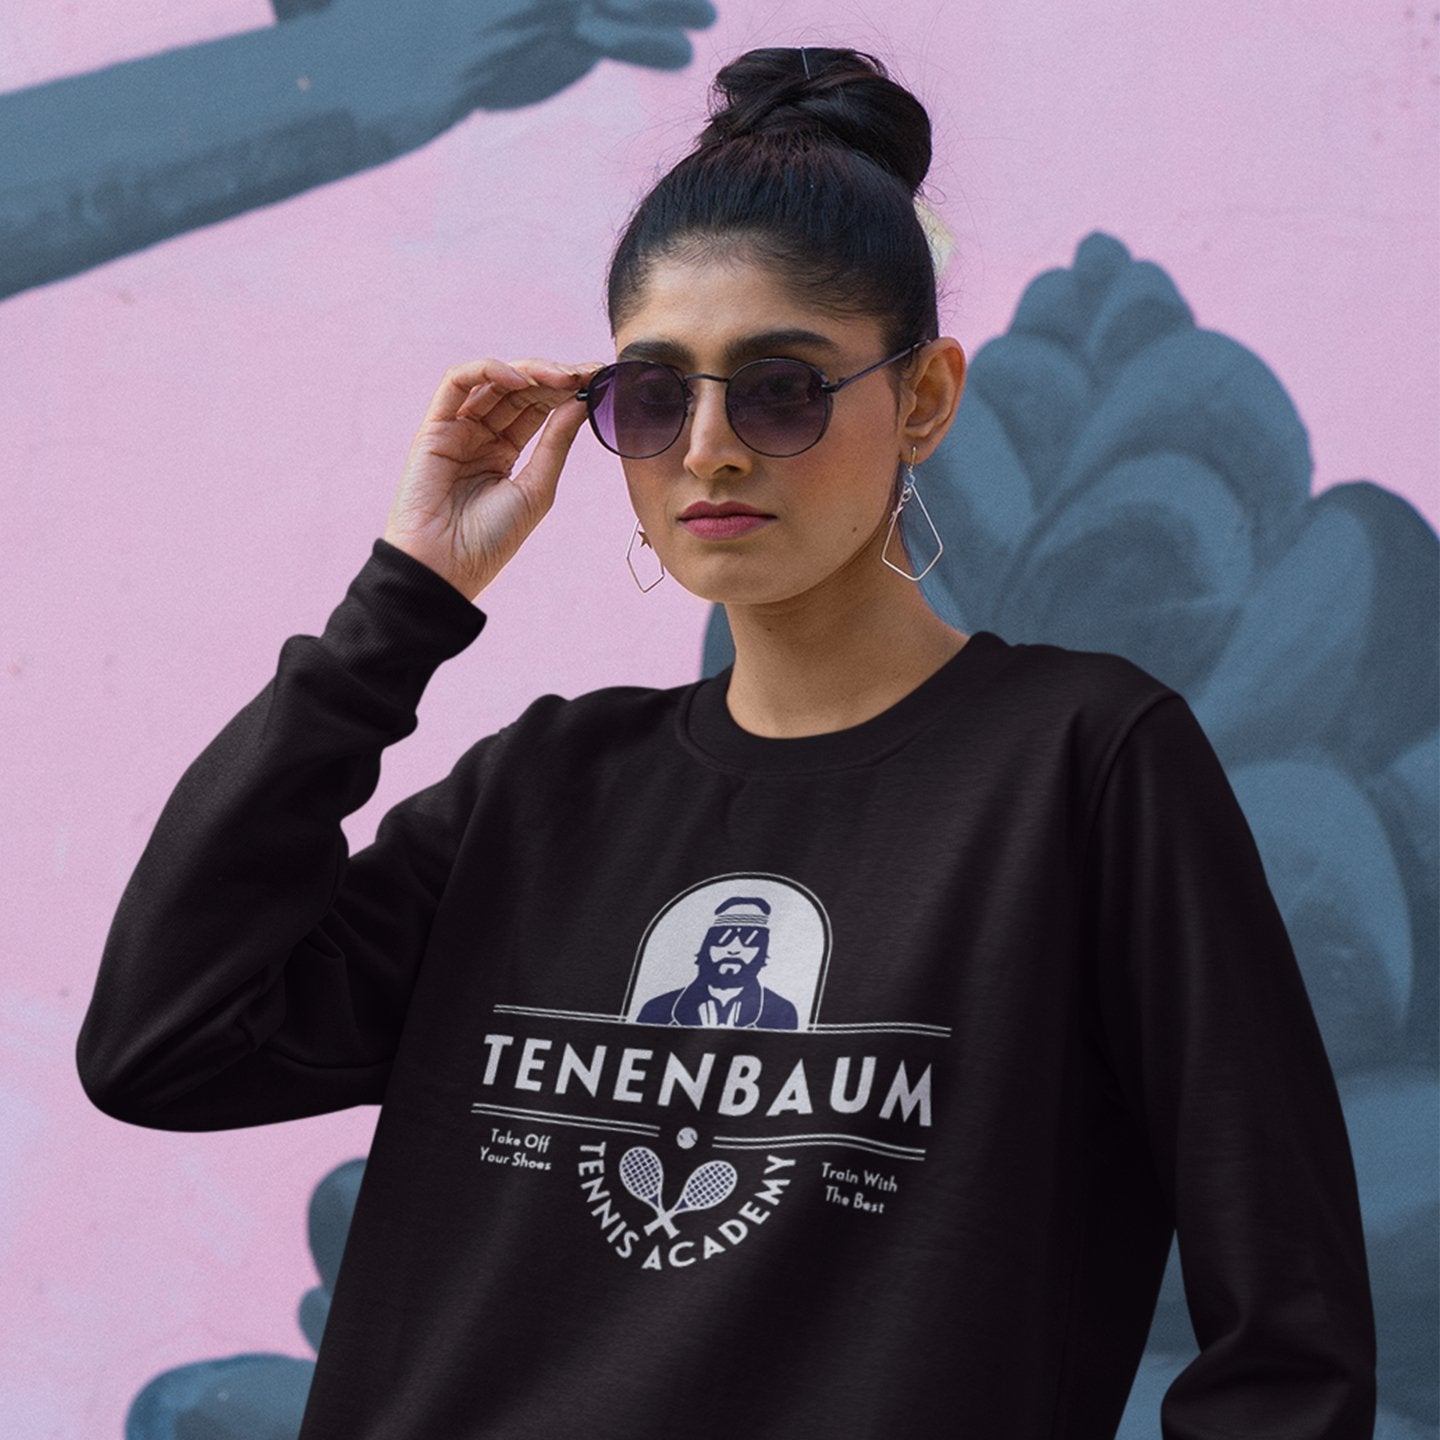 Tenenbaum Tennis Academy - Sweatshirt